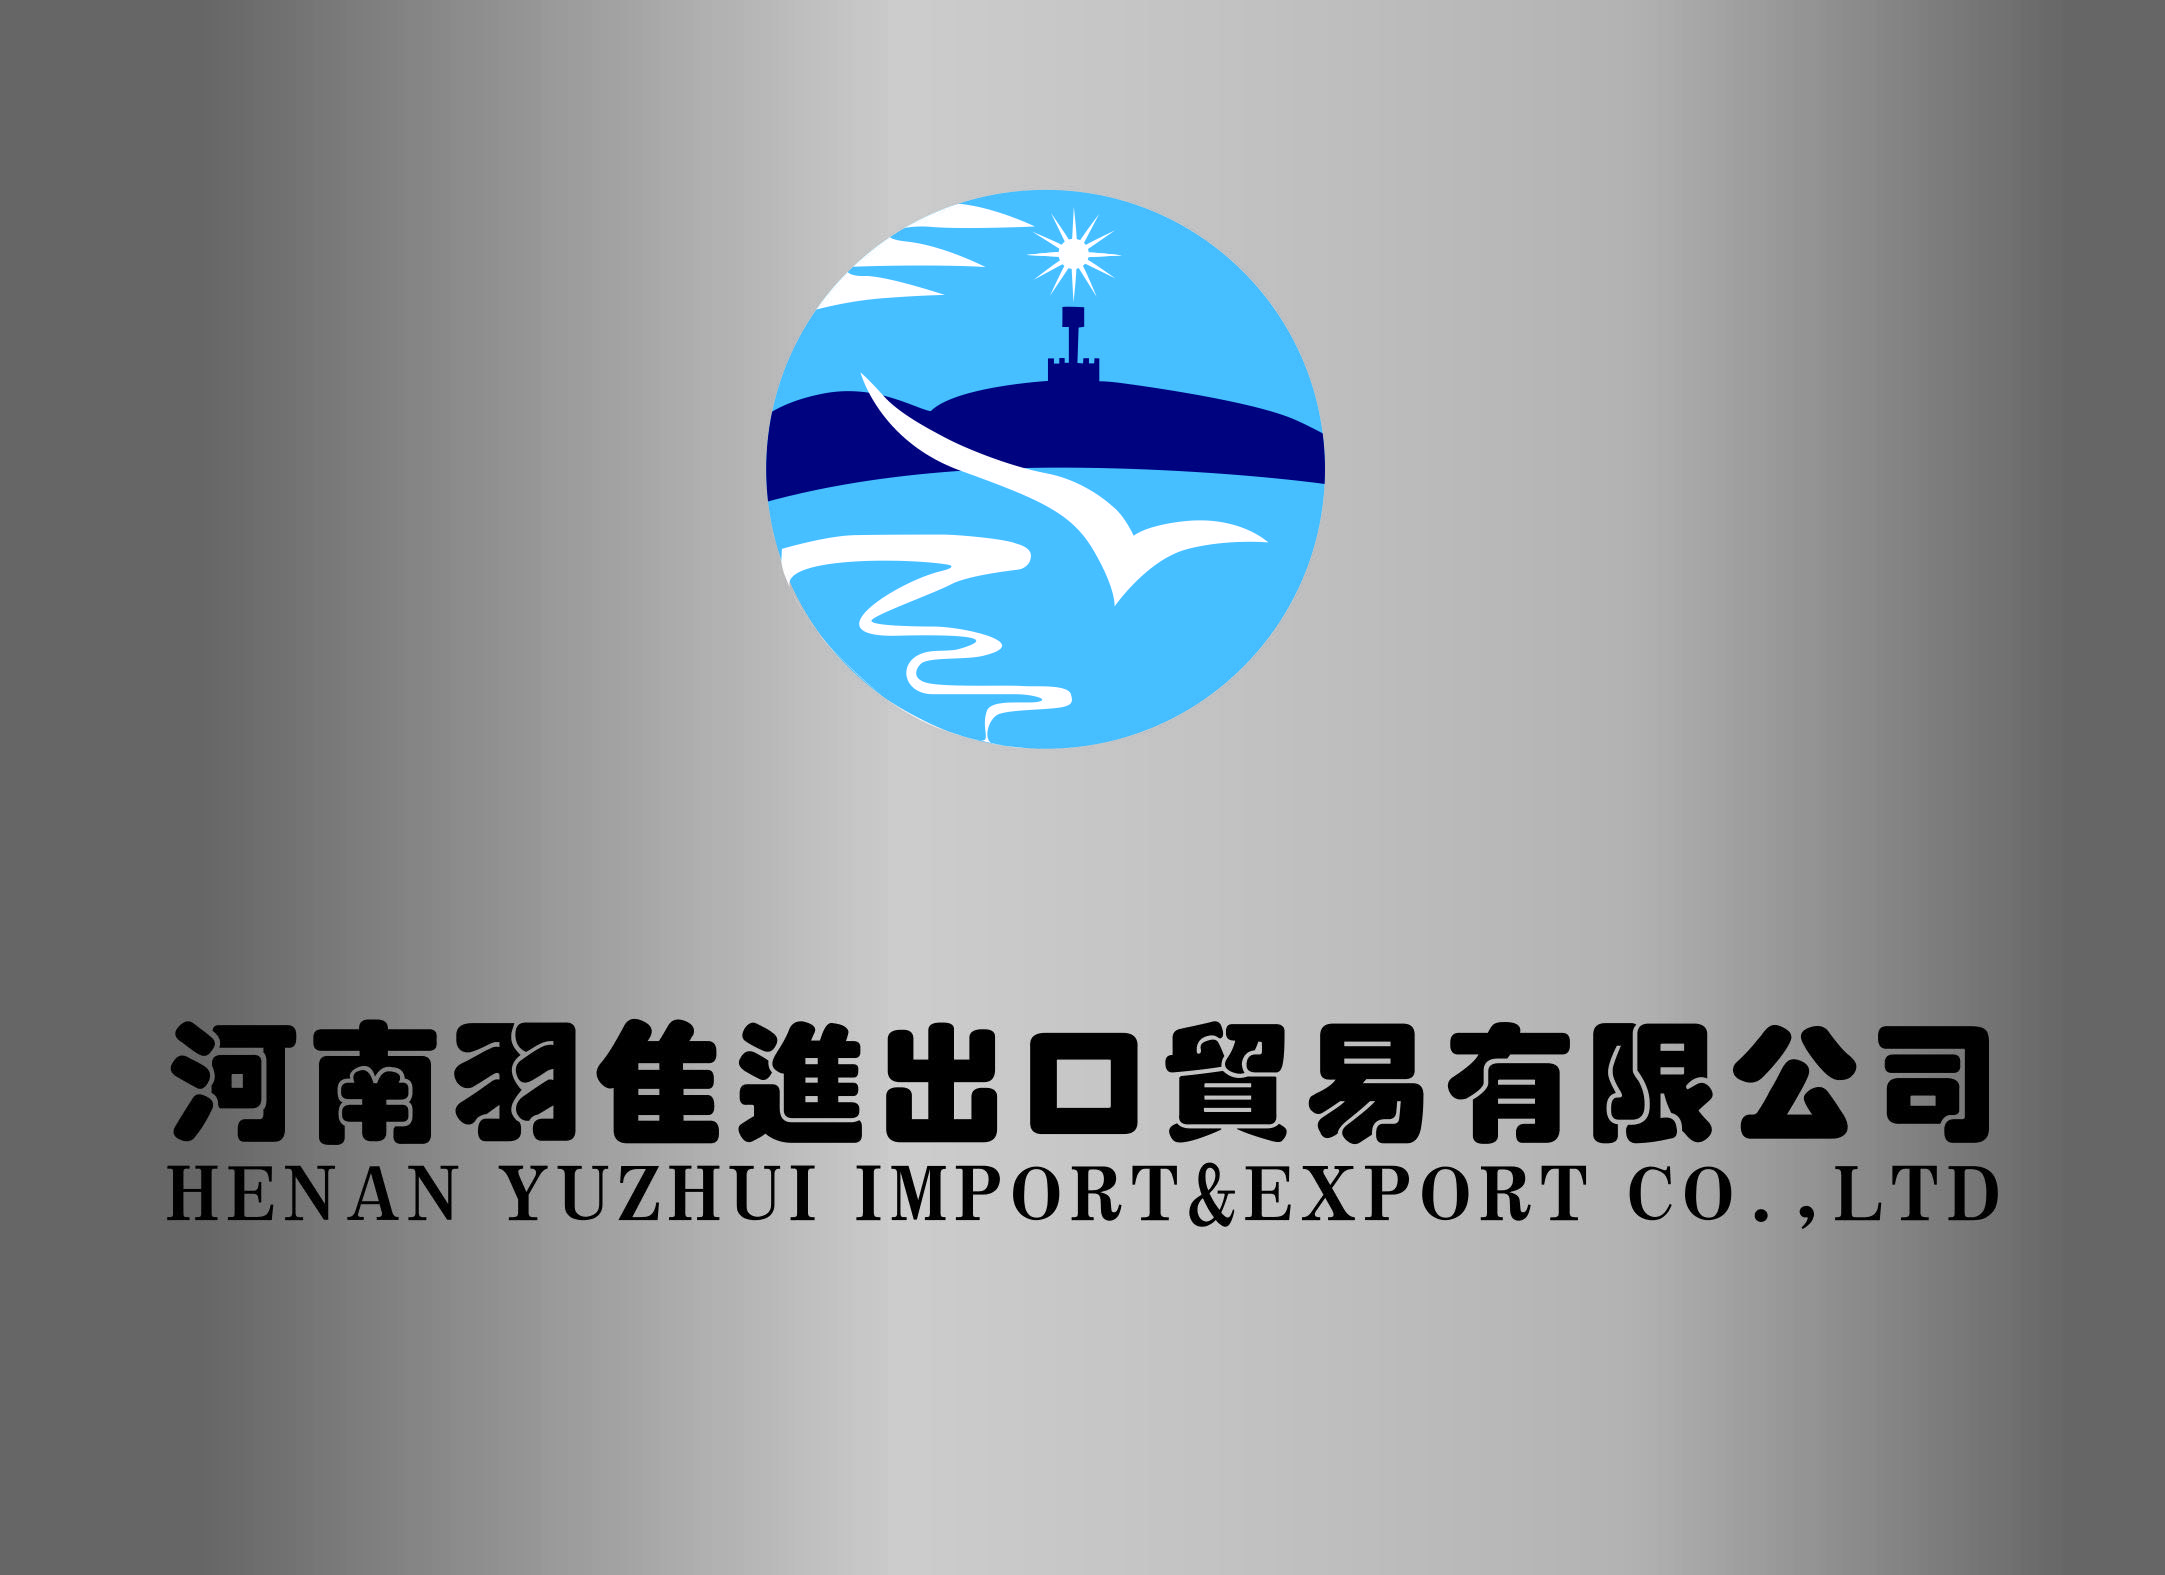 HENAN YUZHUI IMPORT & EXPORT CO.,LTD